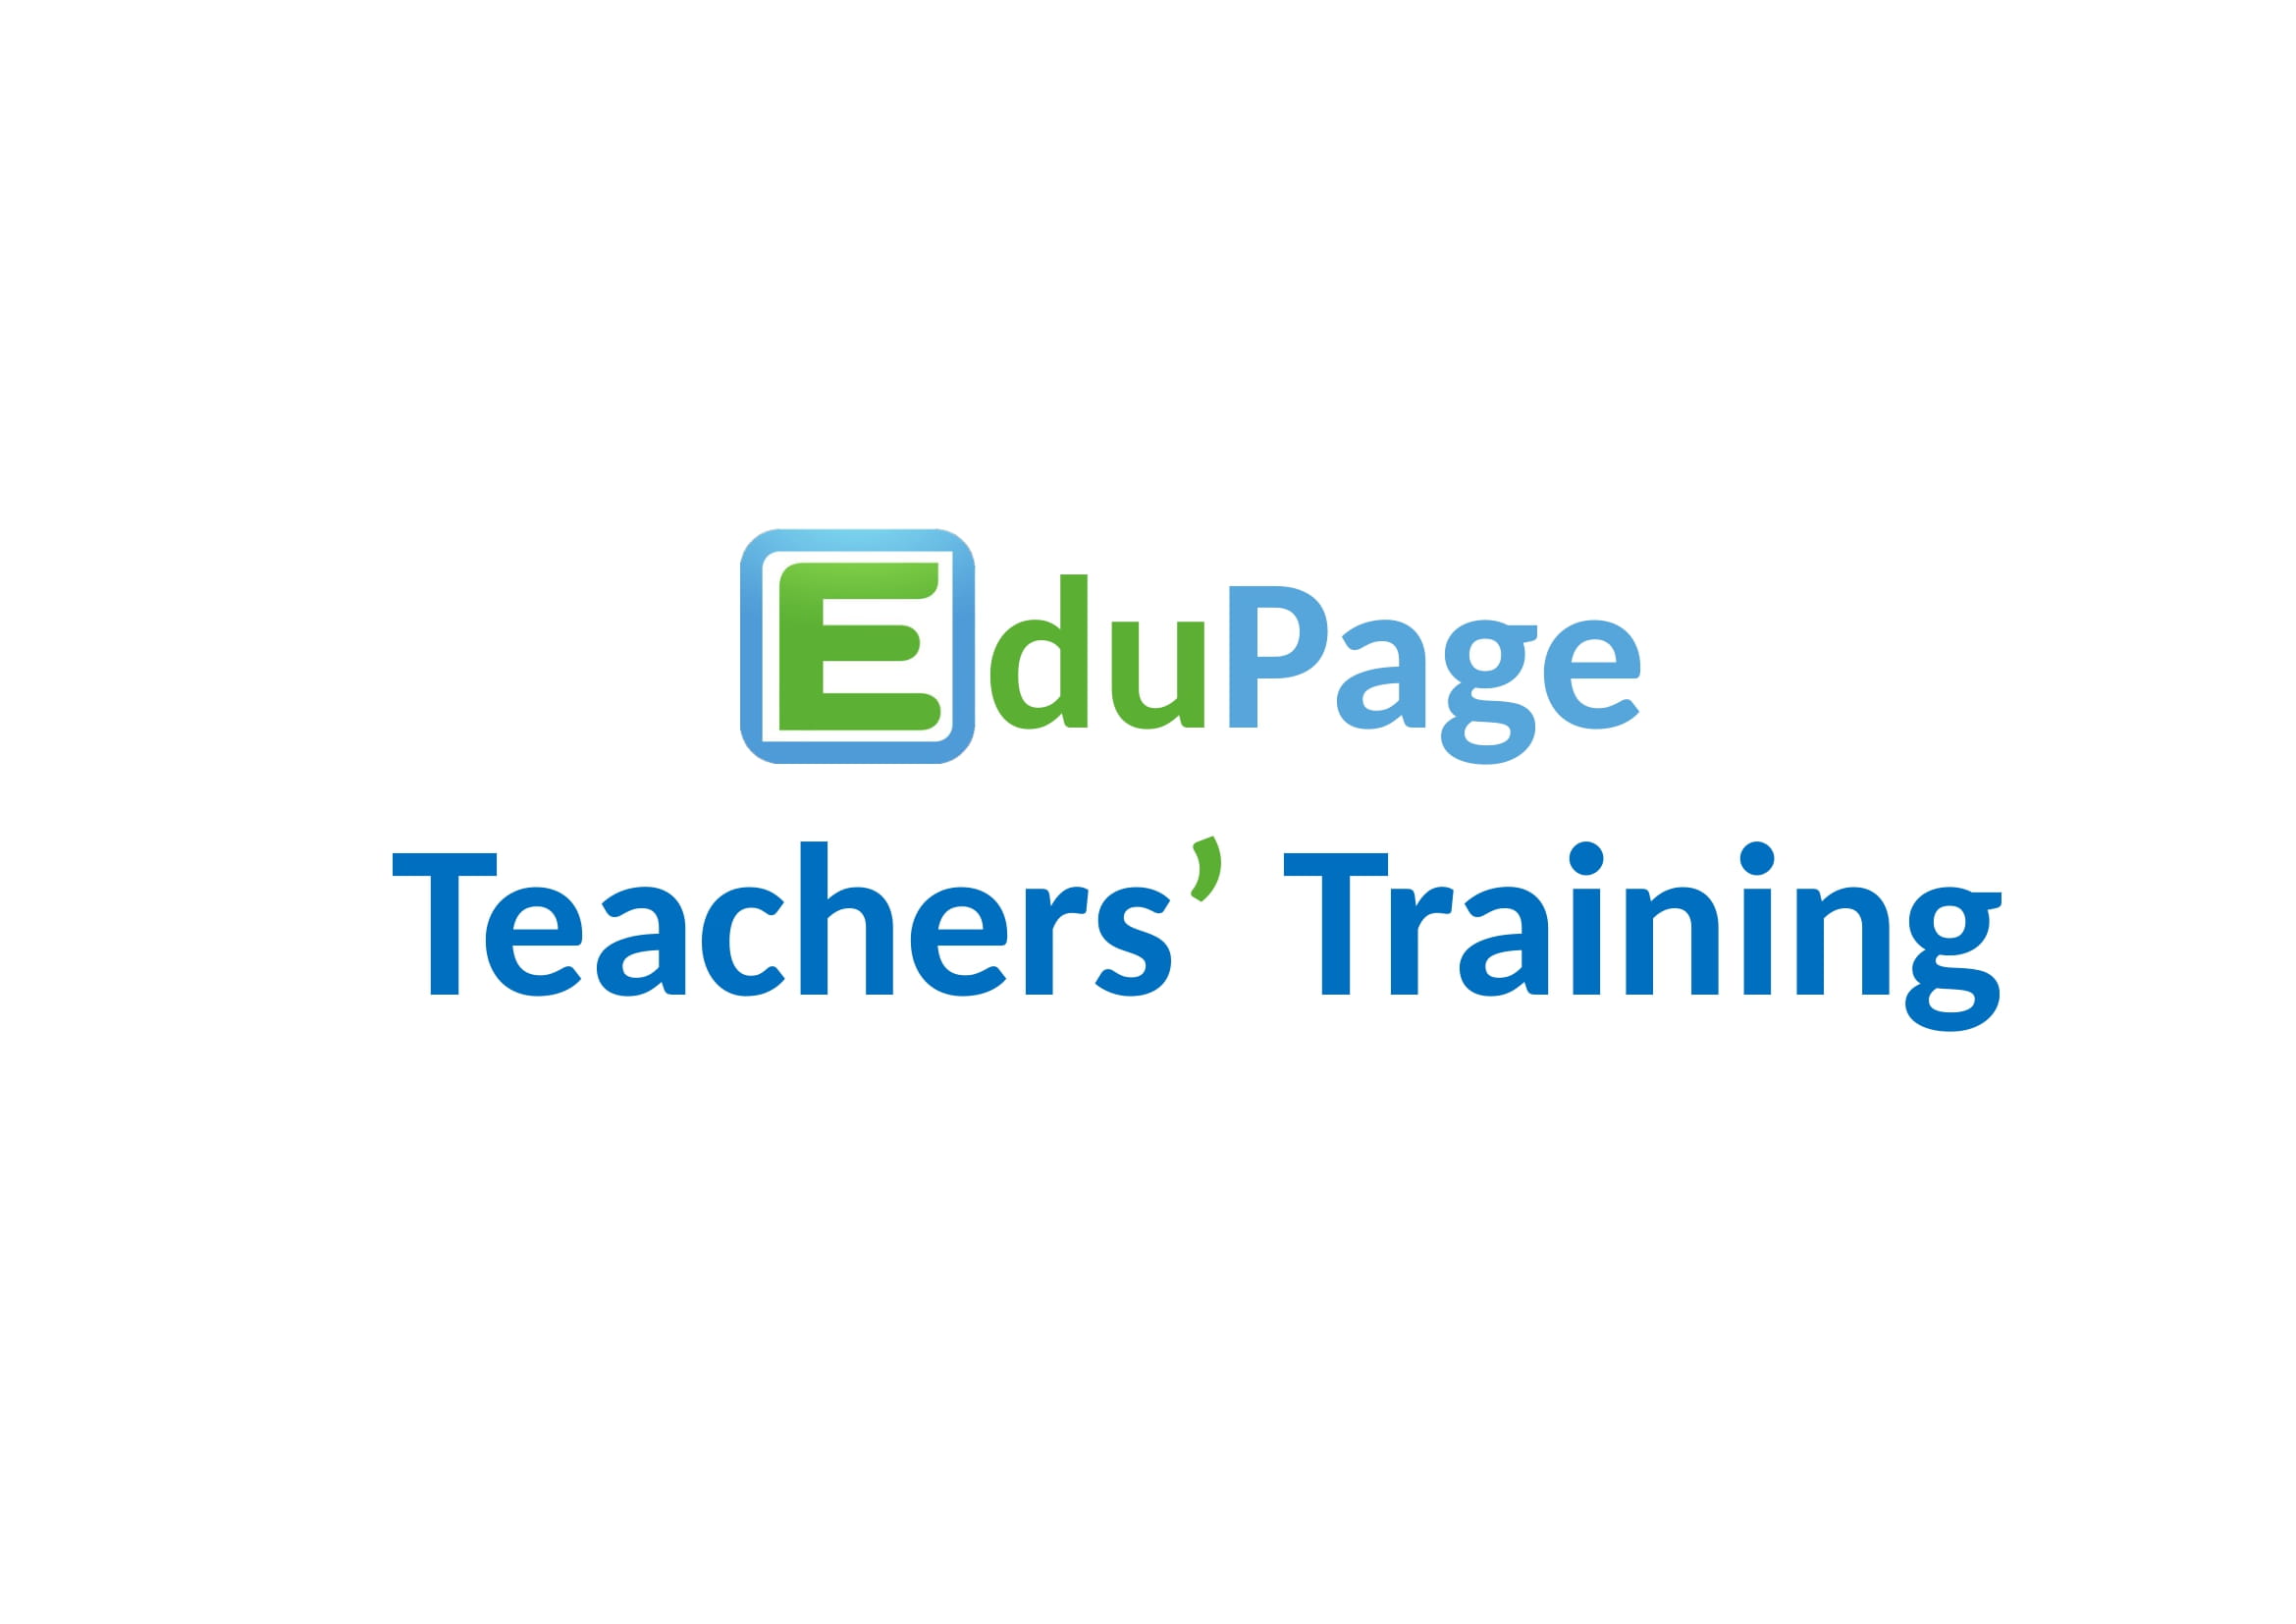 EduPage Teachers’ Training - TakeCourse